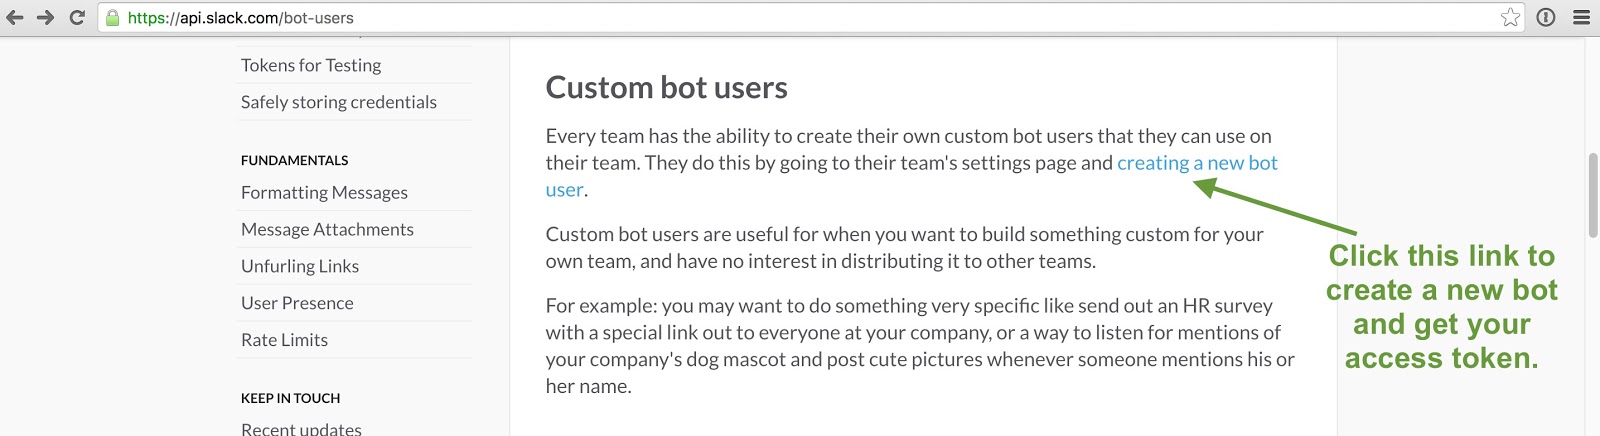 Custom bot users webpage.